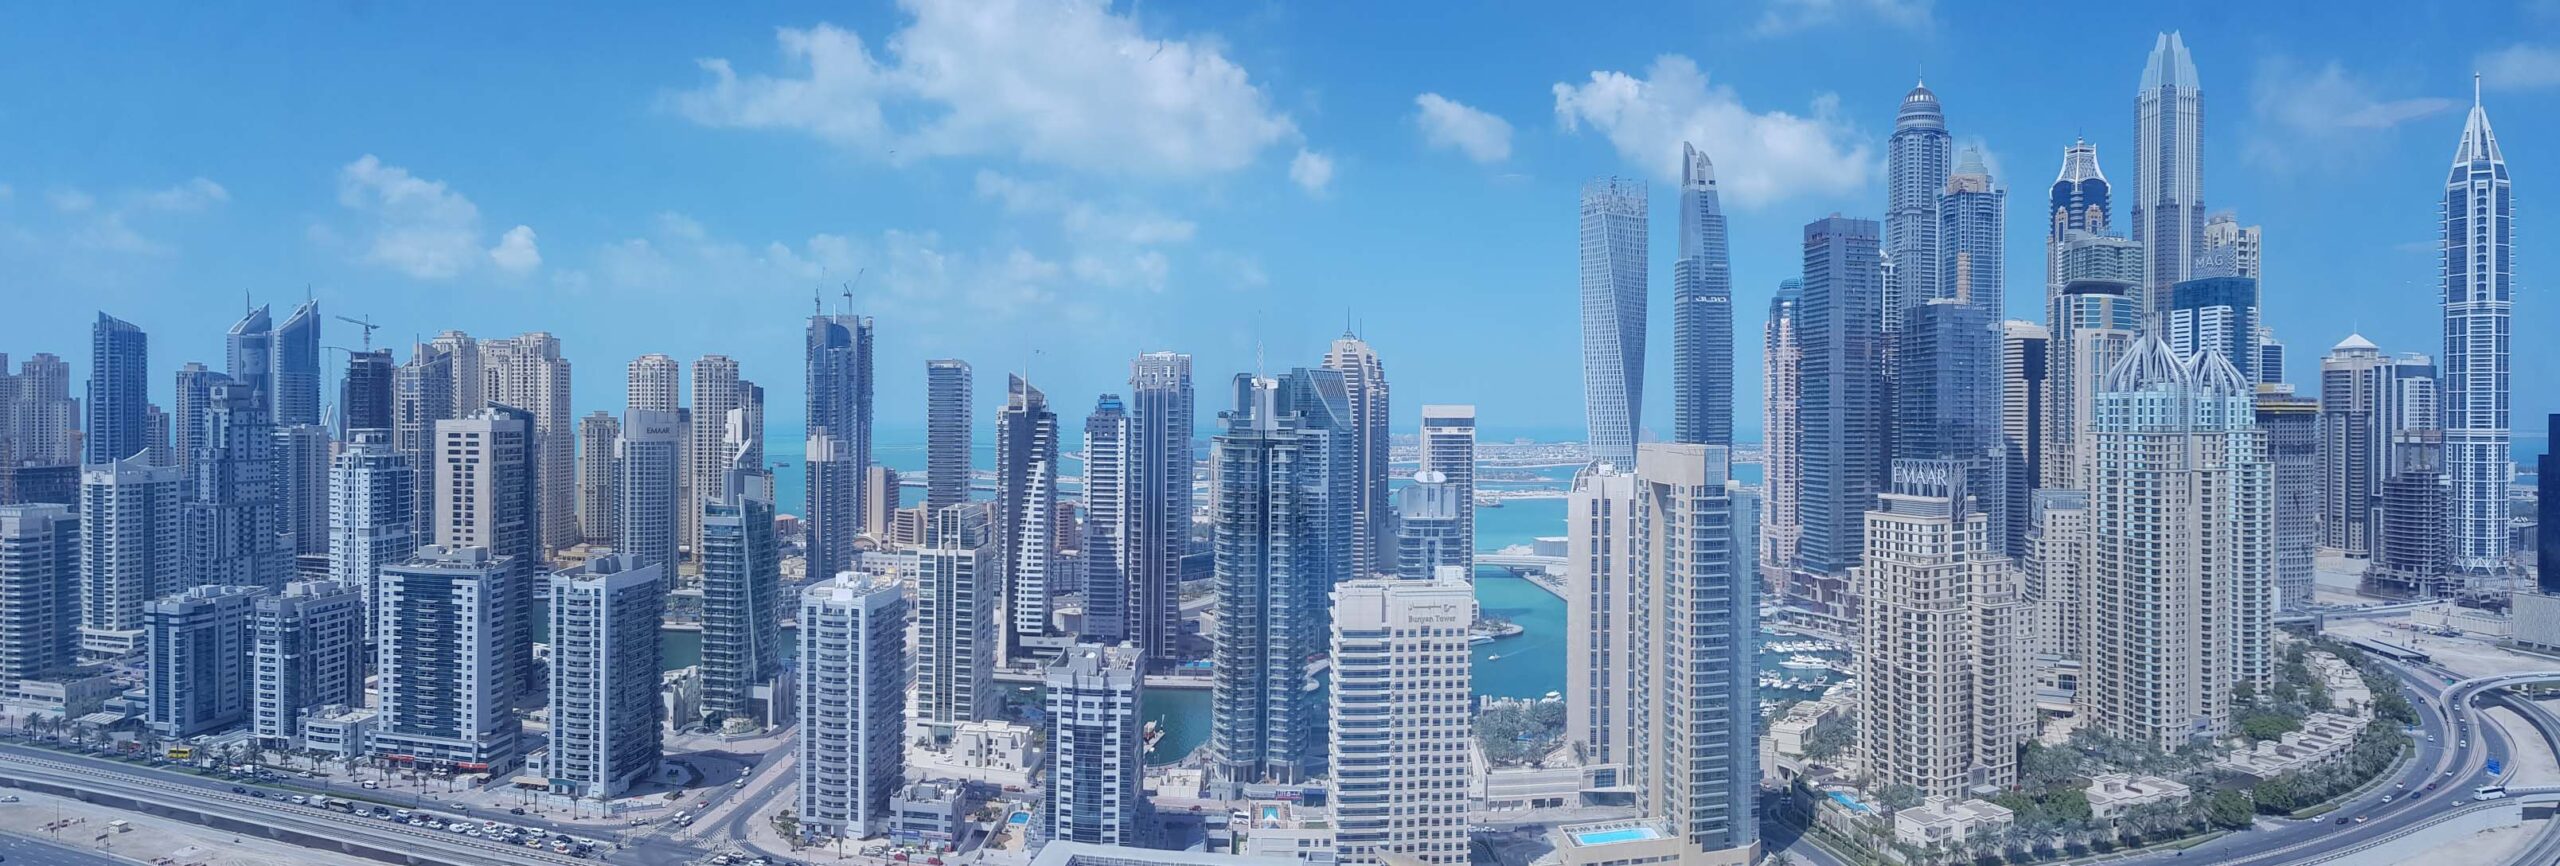 Spectacular architecture at Dubai Marina